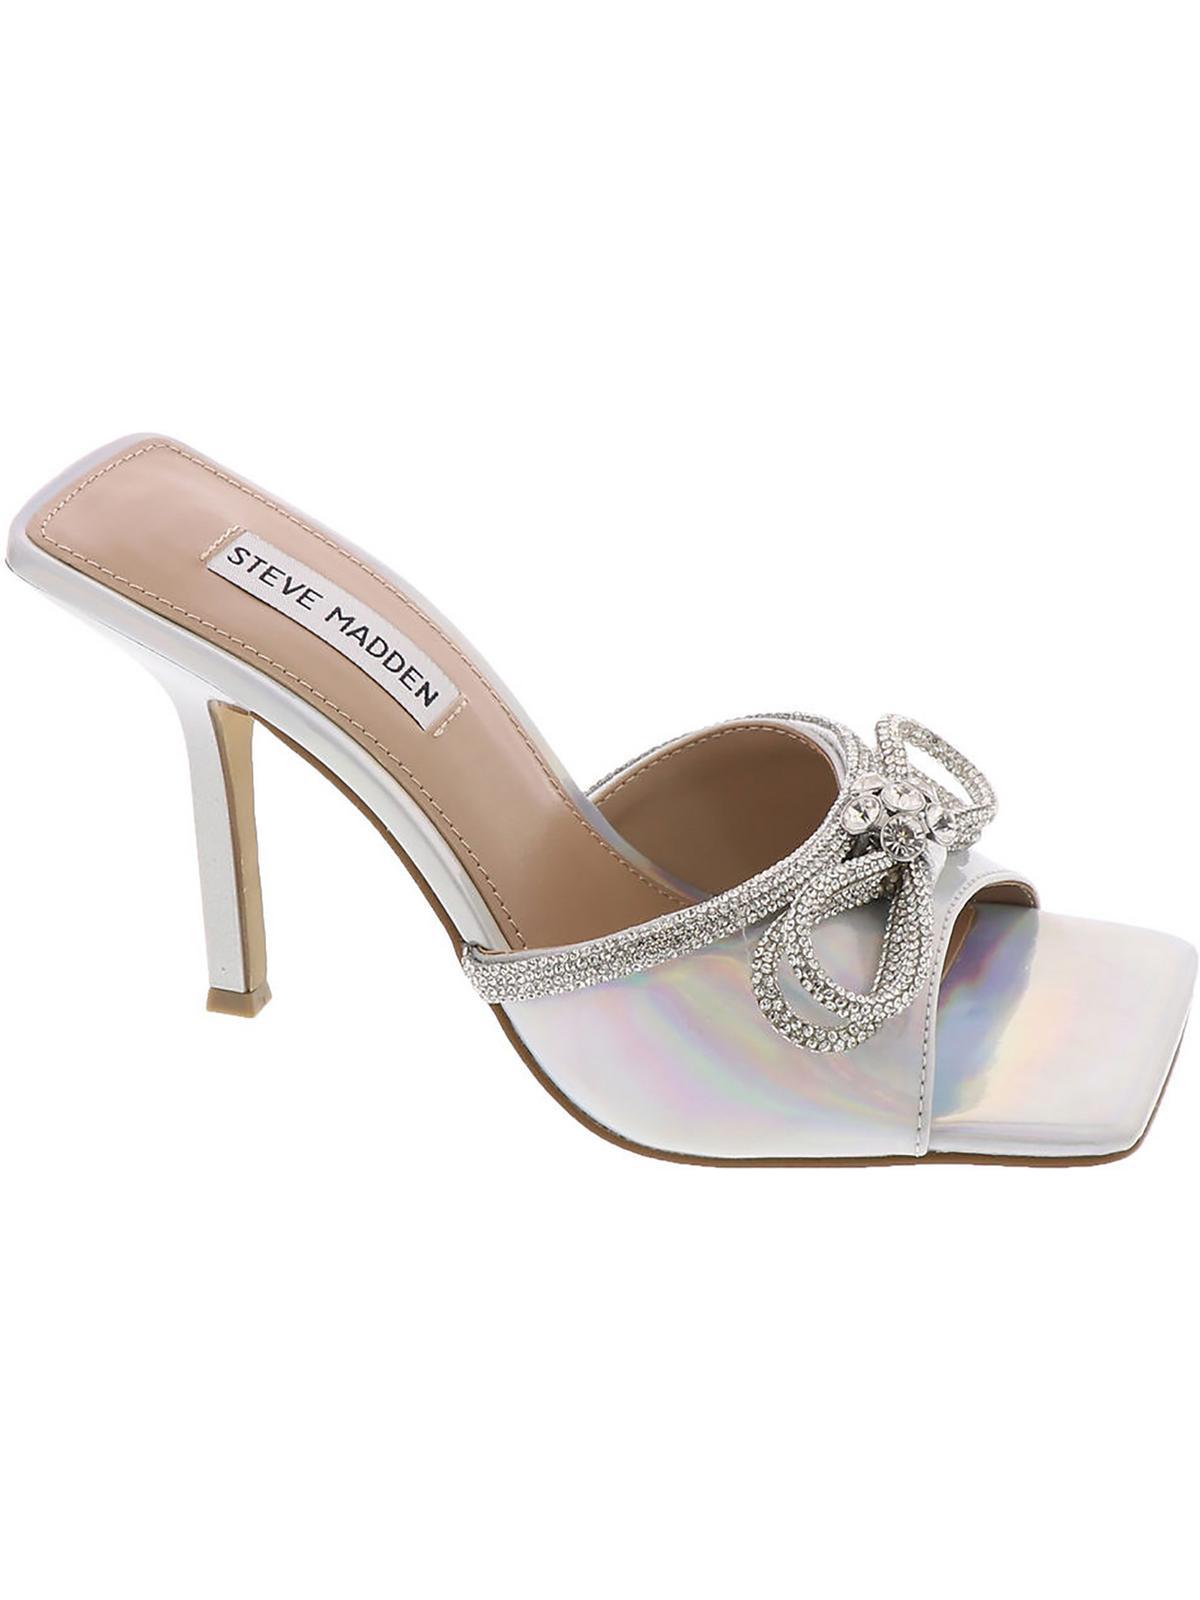 Buy ELLE Lavender Women Solid Plain Heels online